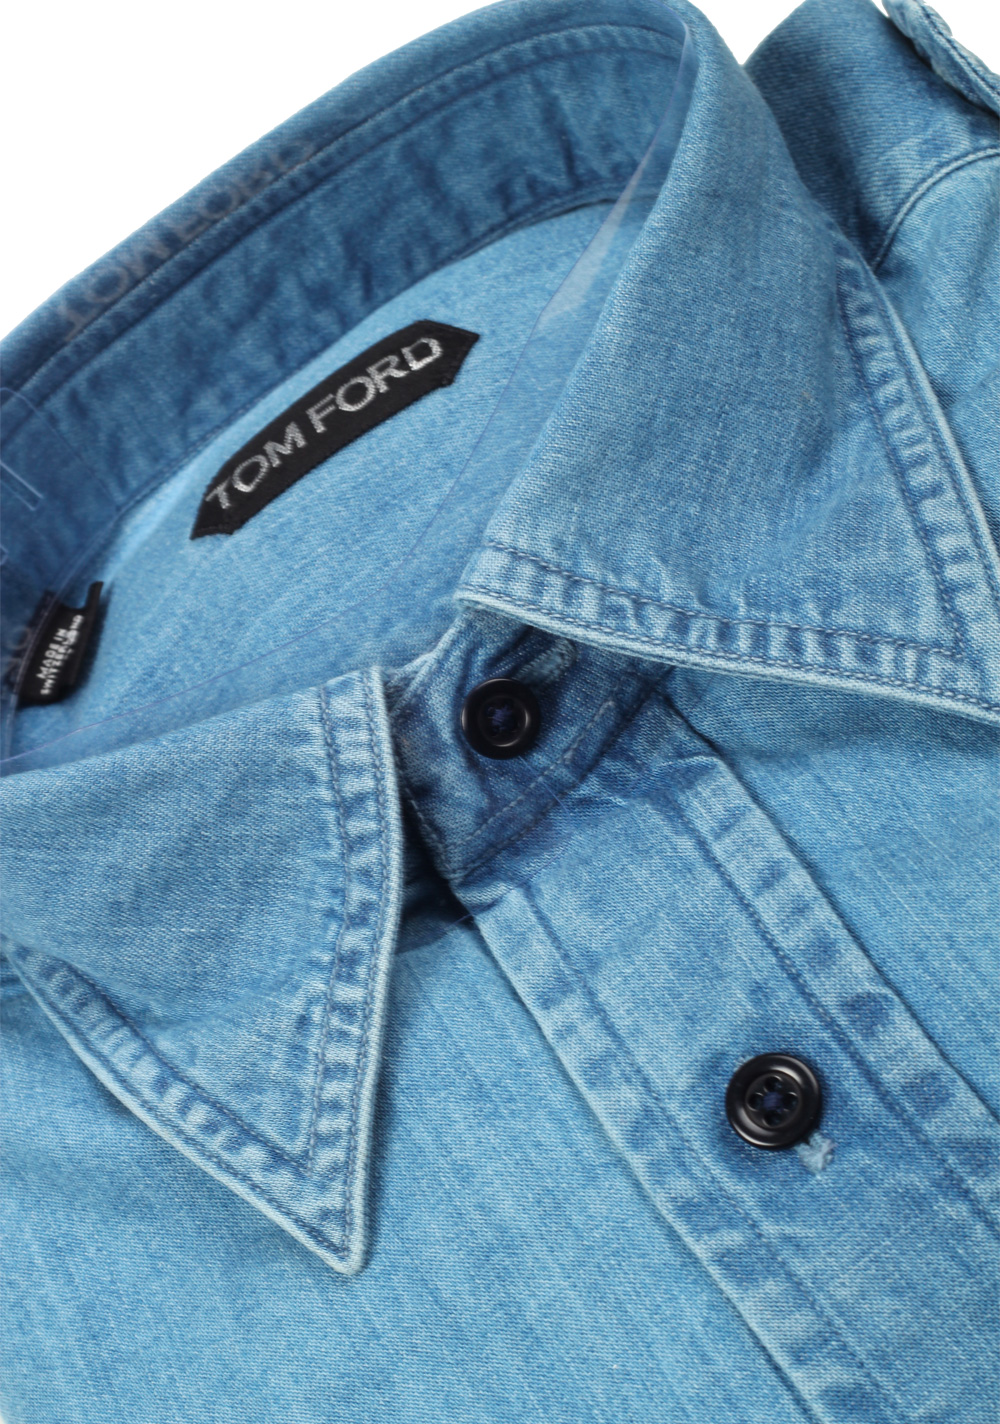 TOM FORD Solid Blue Denim Western Casual Shirt Size 40 / 15,75 U.S. | Costume Limité